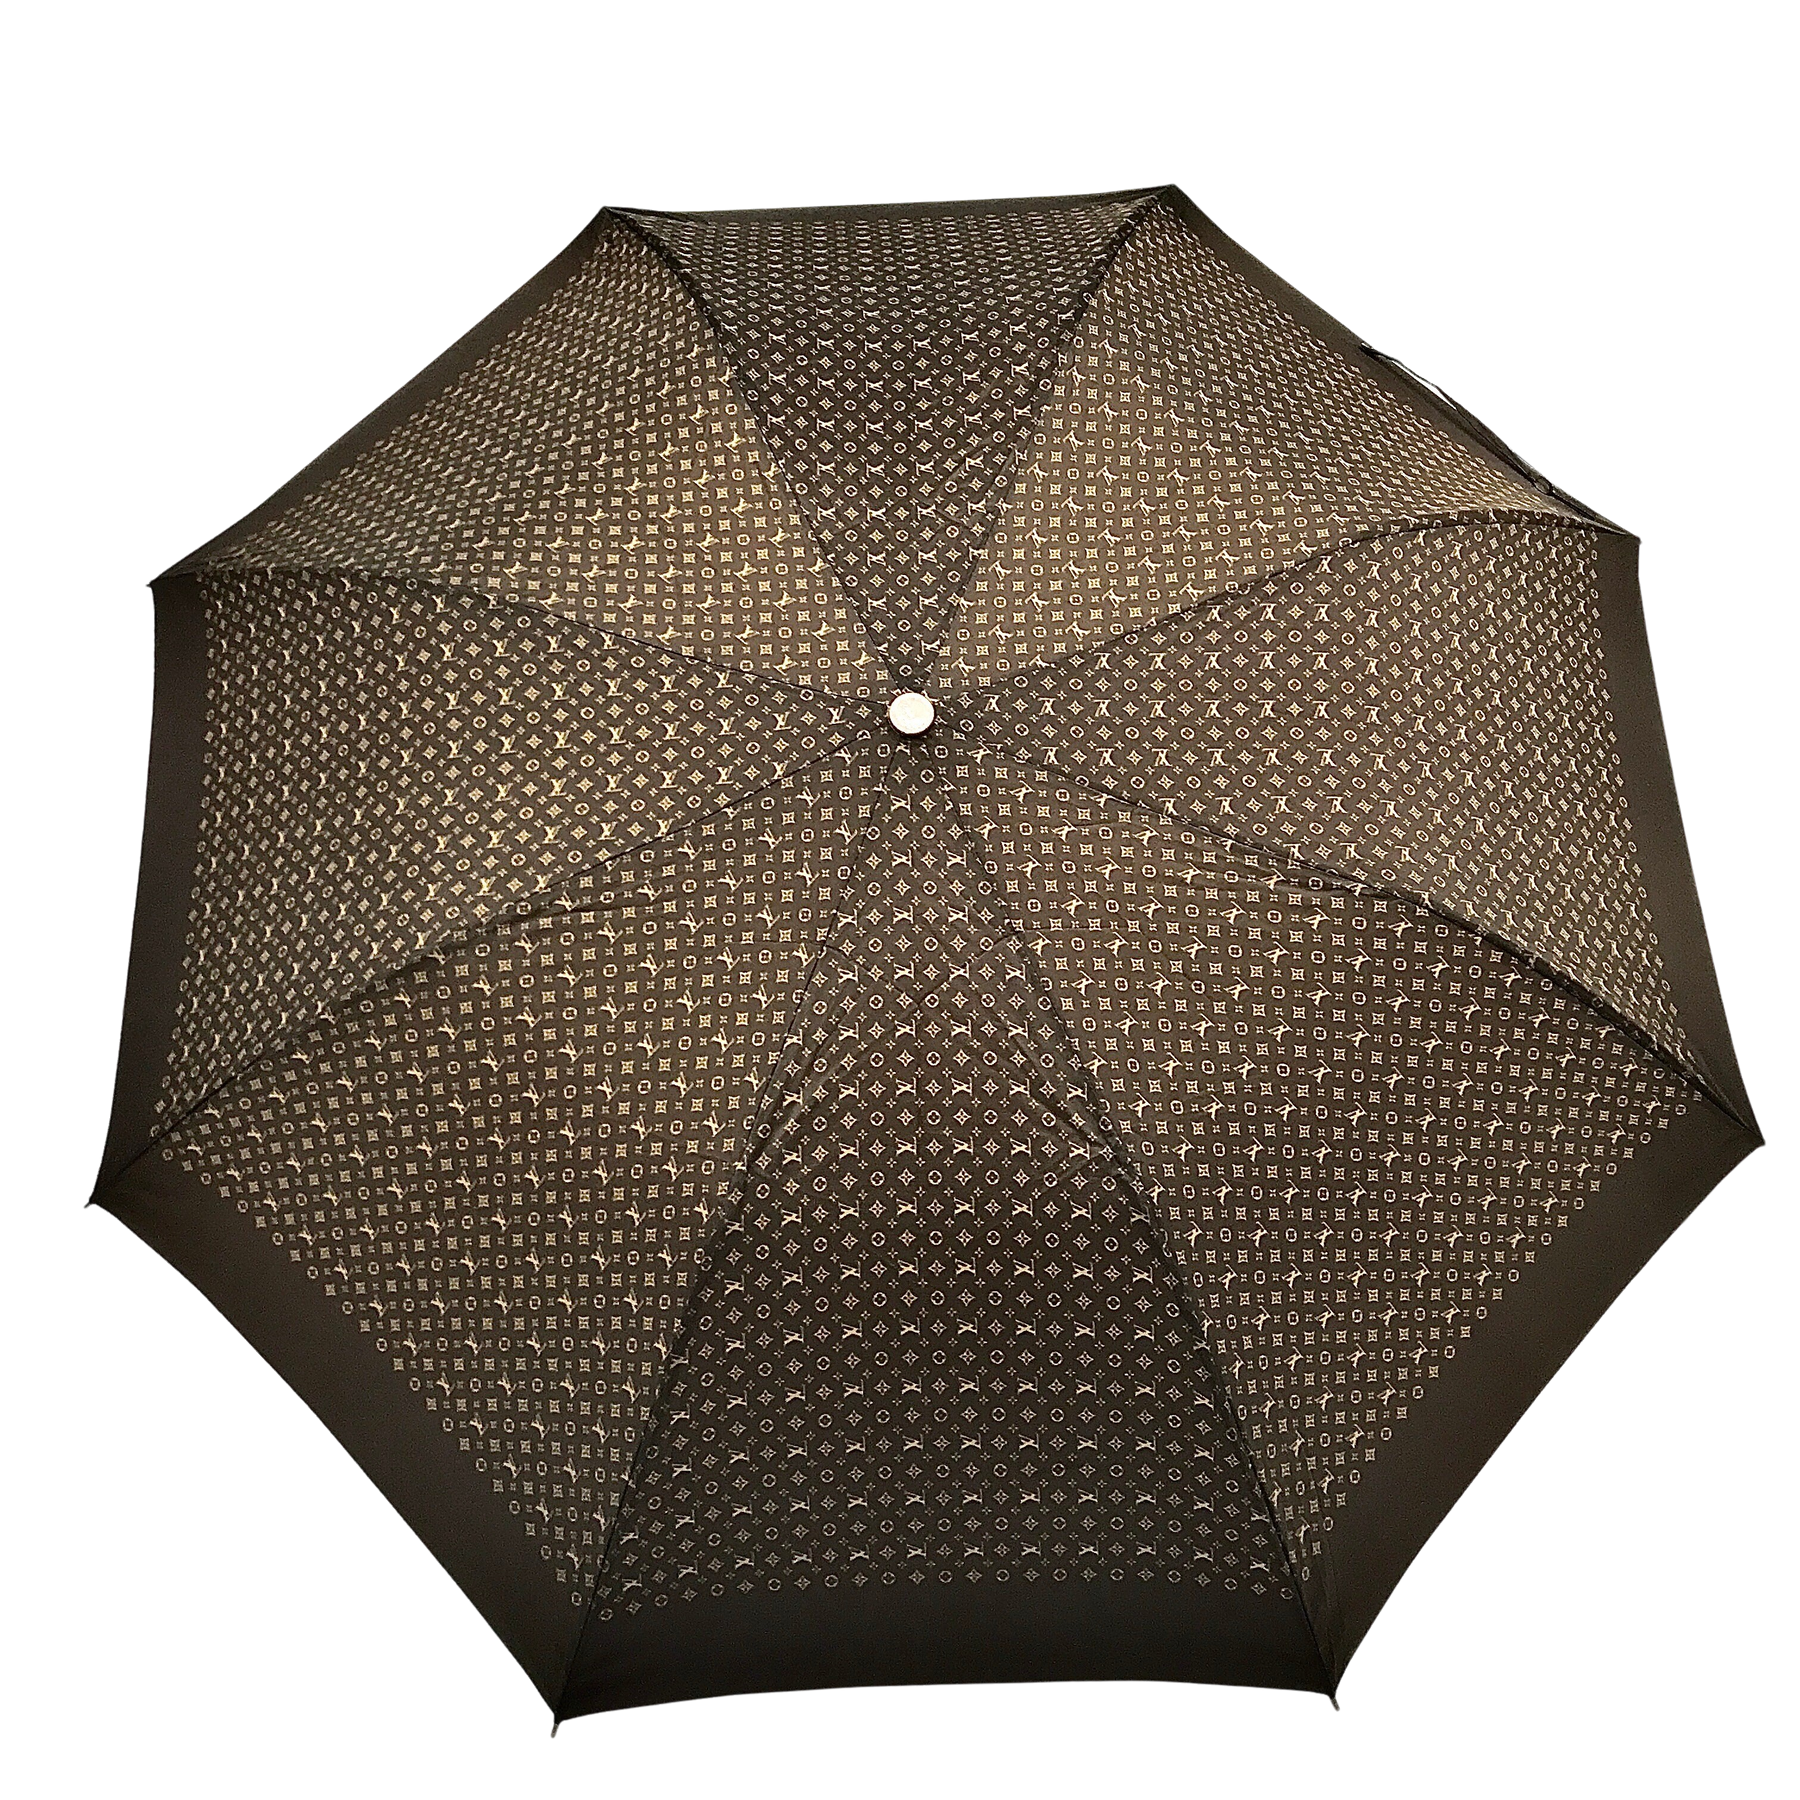 Authentic MONOGRAM Brown Louis Vuitton Umbrella, Made In France